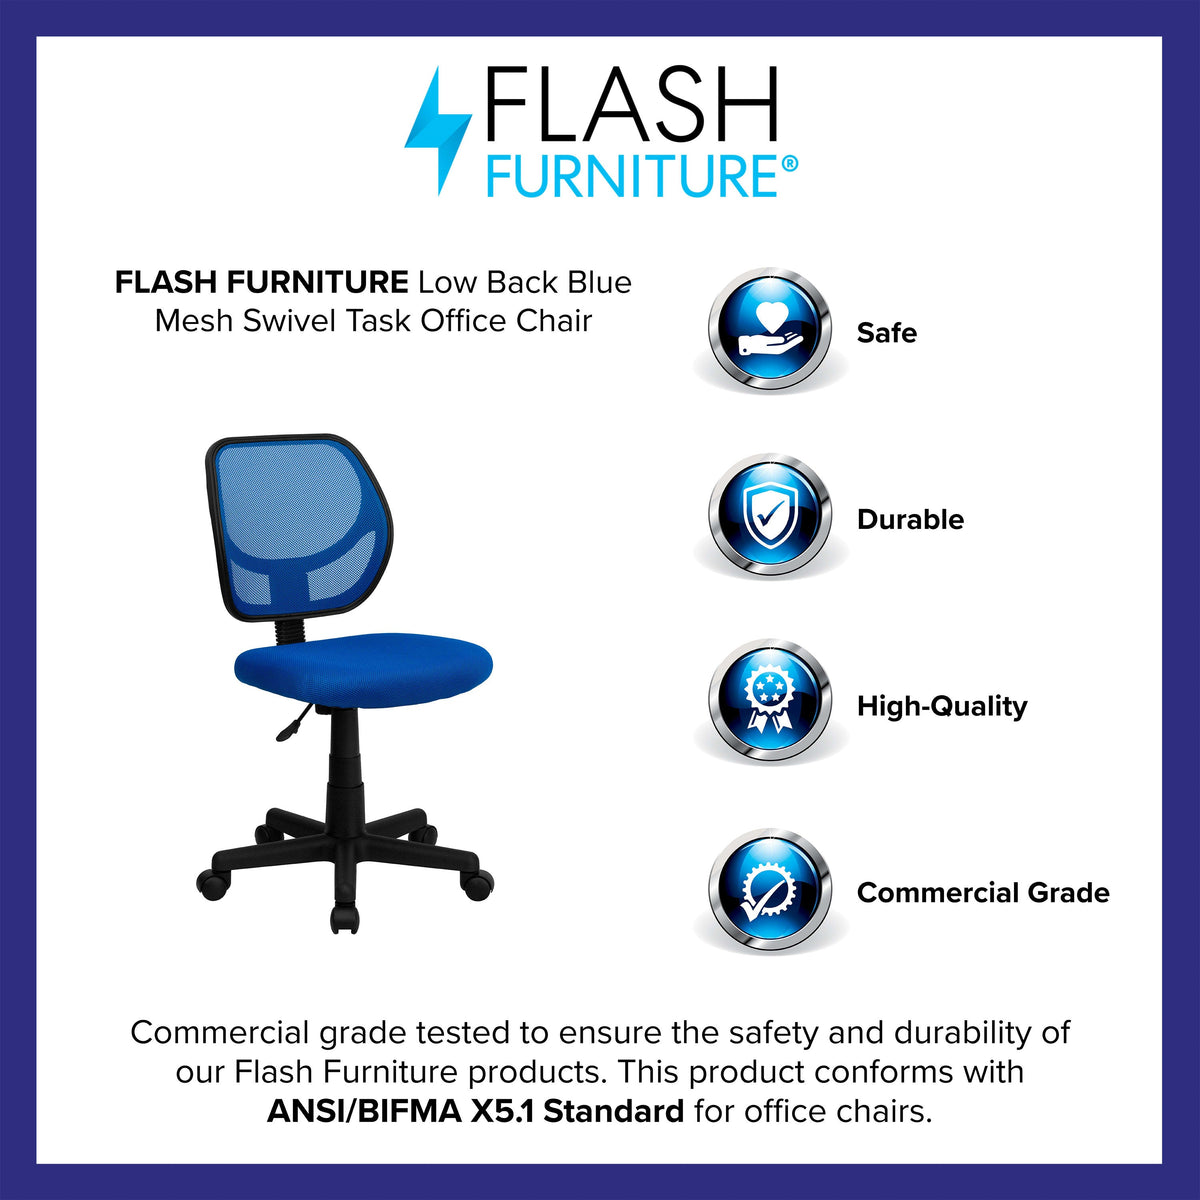 Blue |#| Low Back Blue Transparent Mesh Back Adjustable Height Swivel Task Office Chair